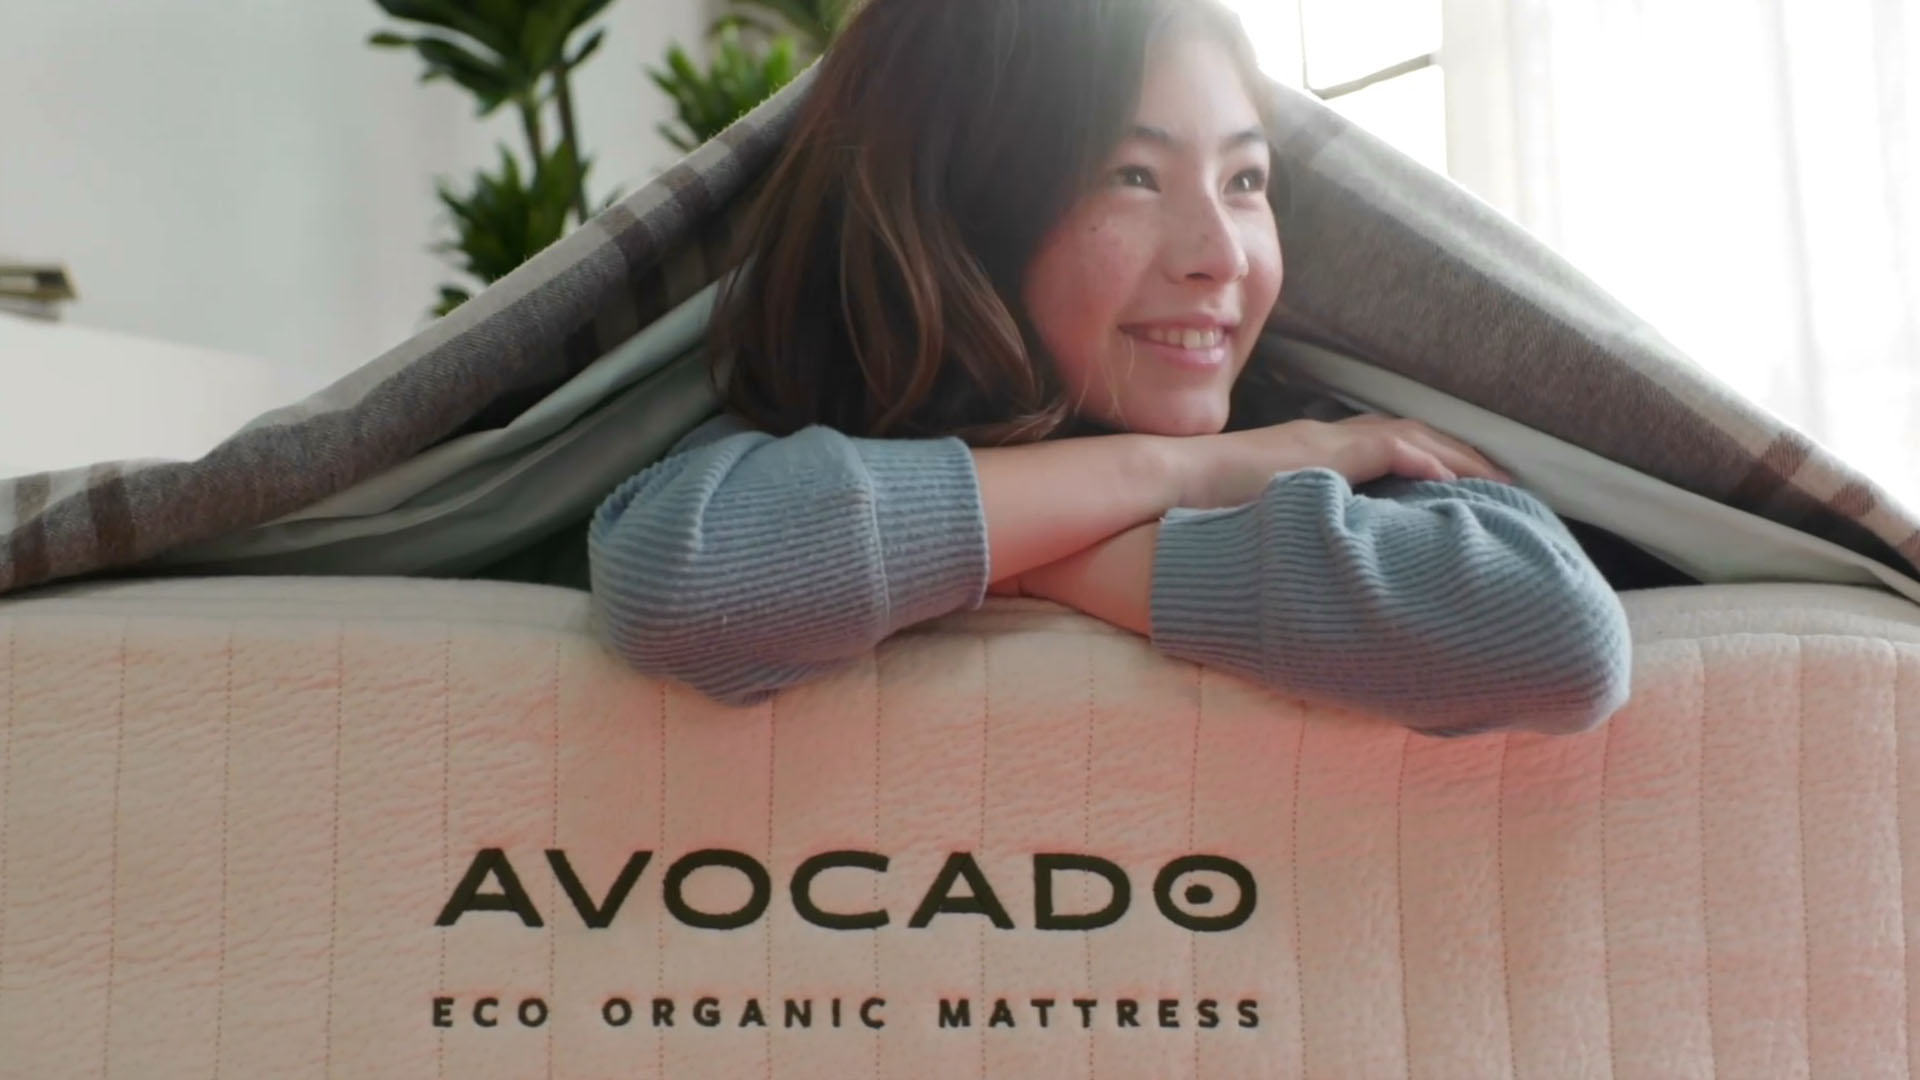 Who sells Avocado mattress near me in Warwick